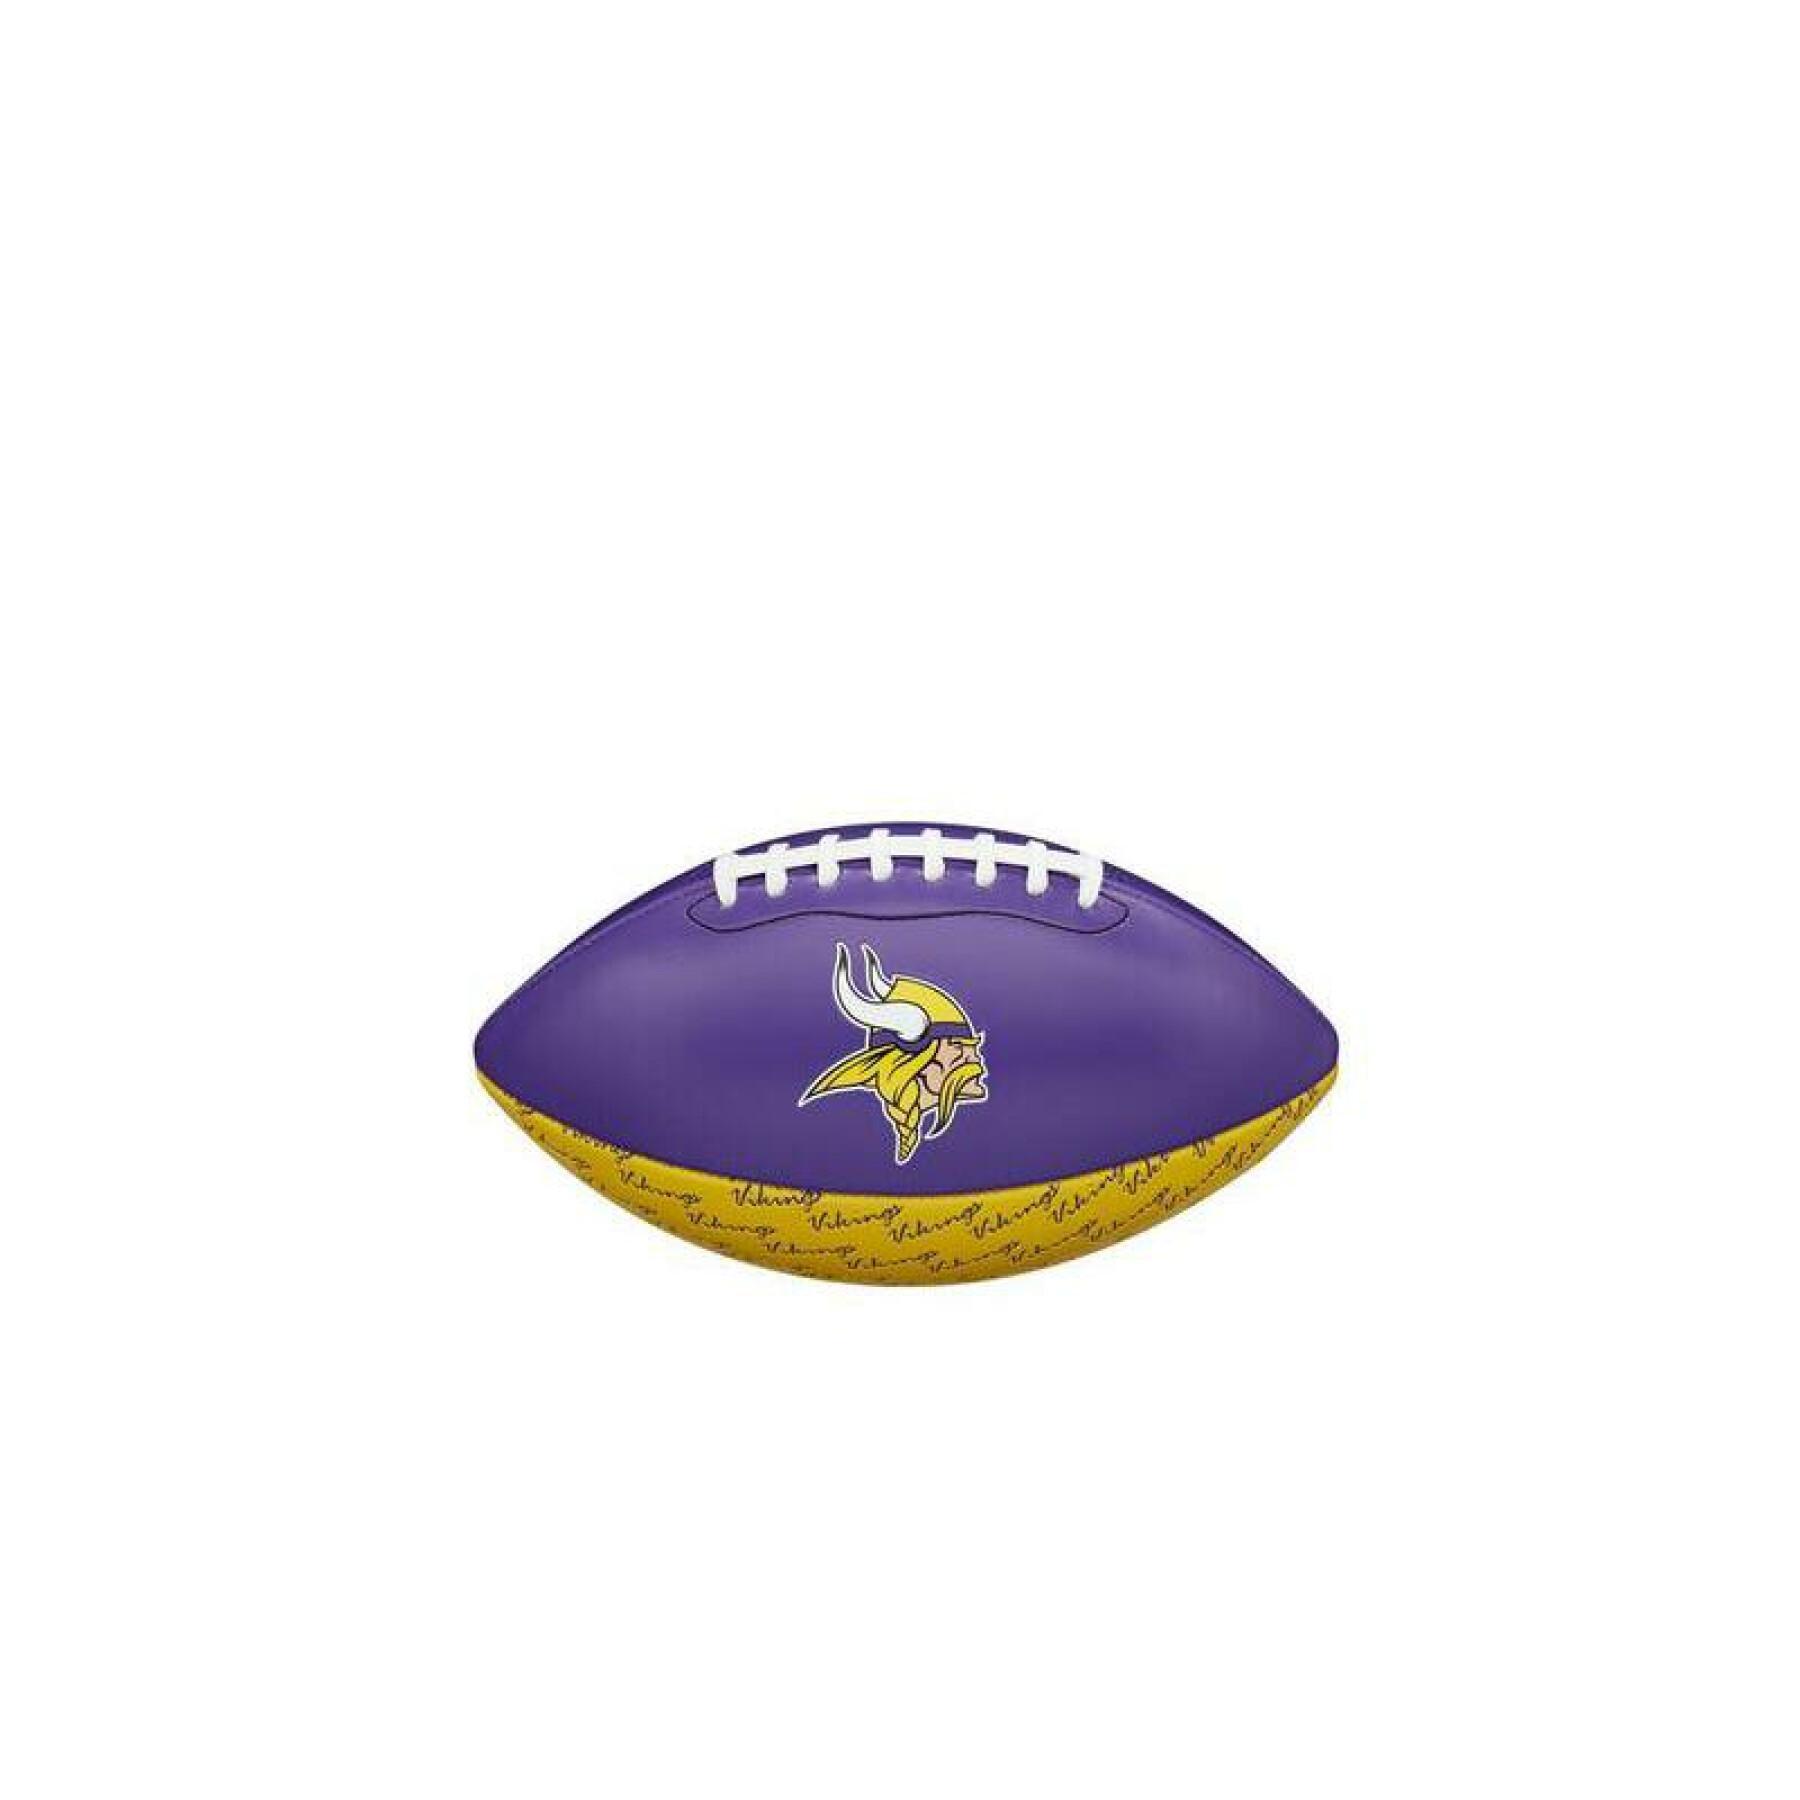 Children's mini ball nfl Minnesota Vikings